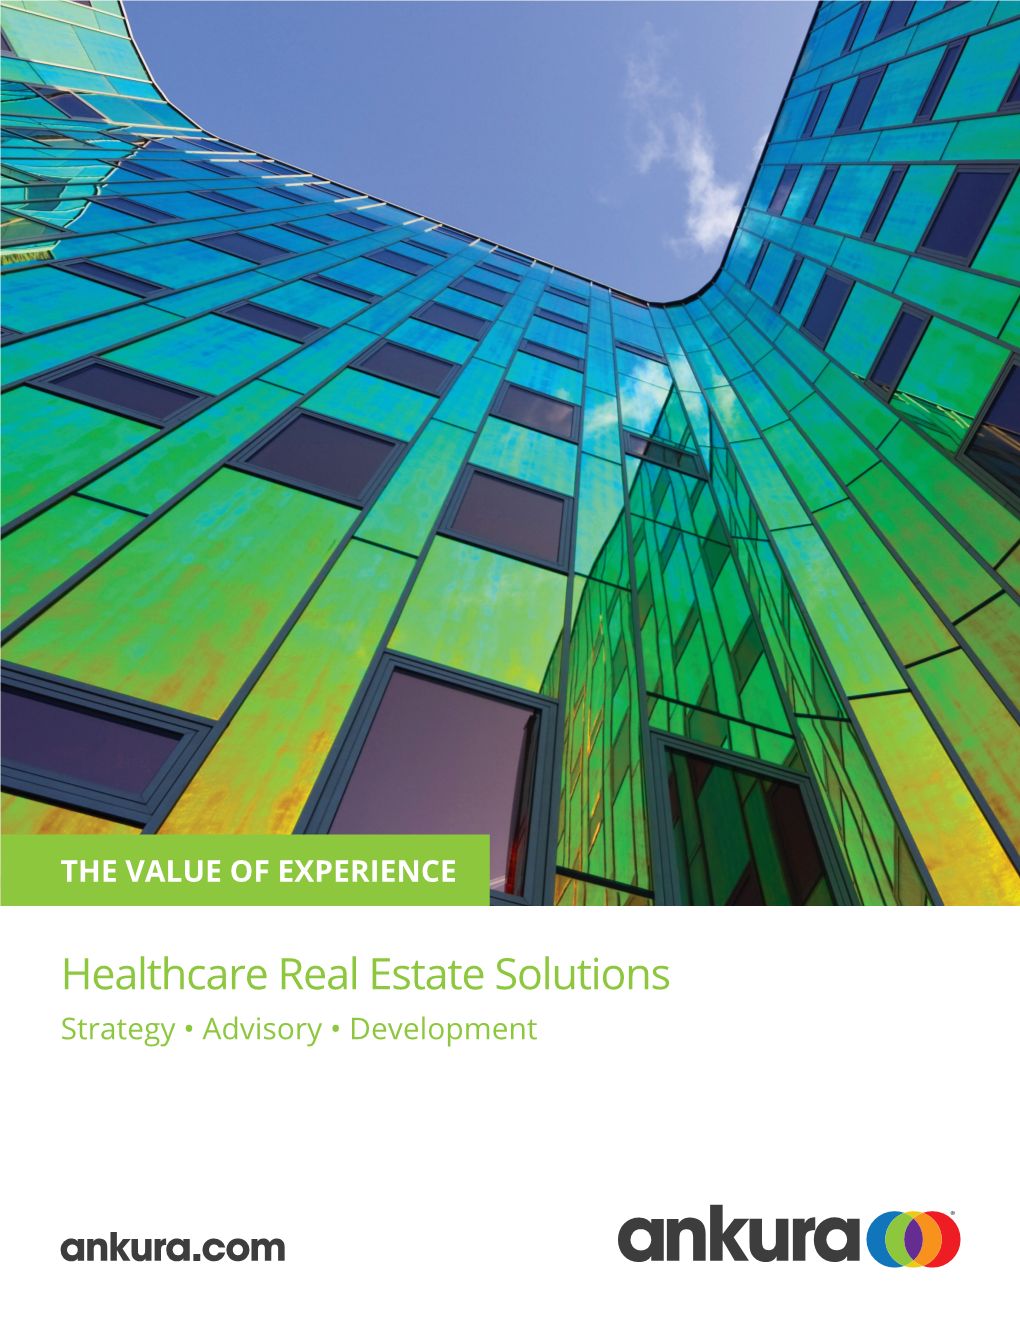 Ankura Healthcare Real Estate Solutions